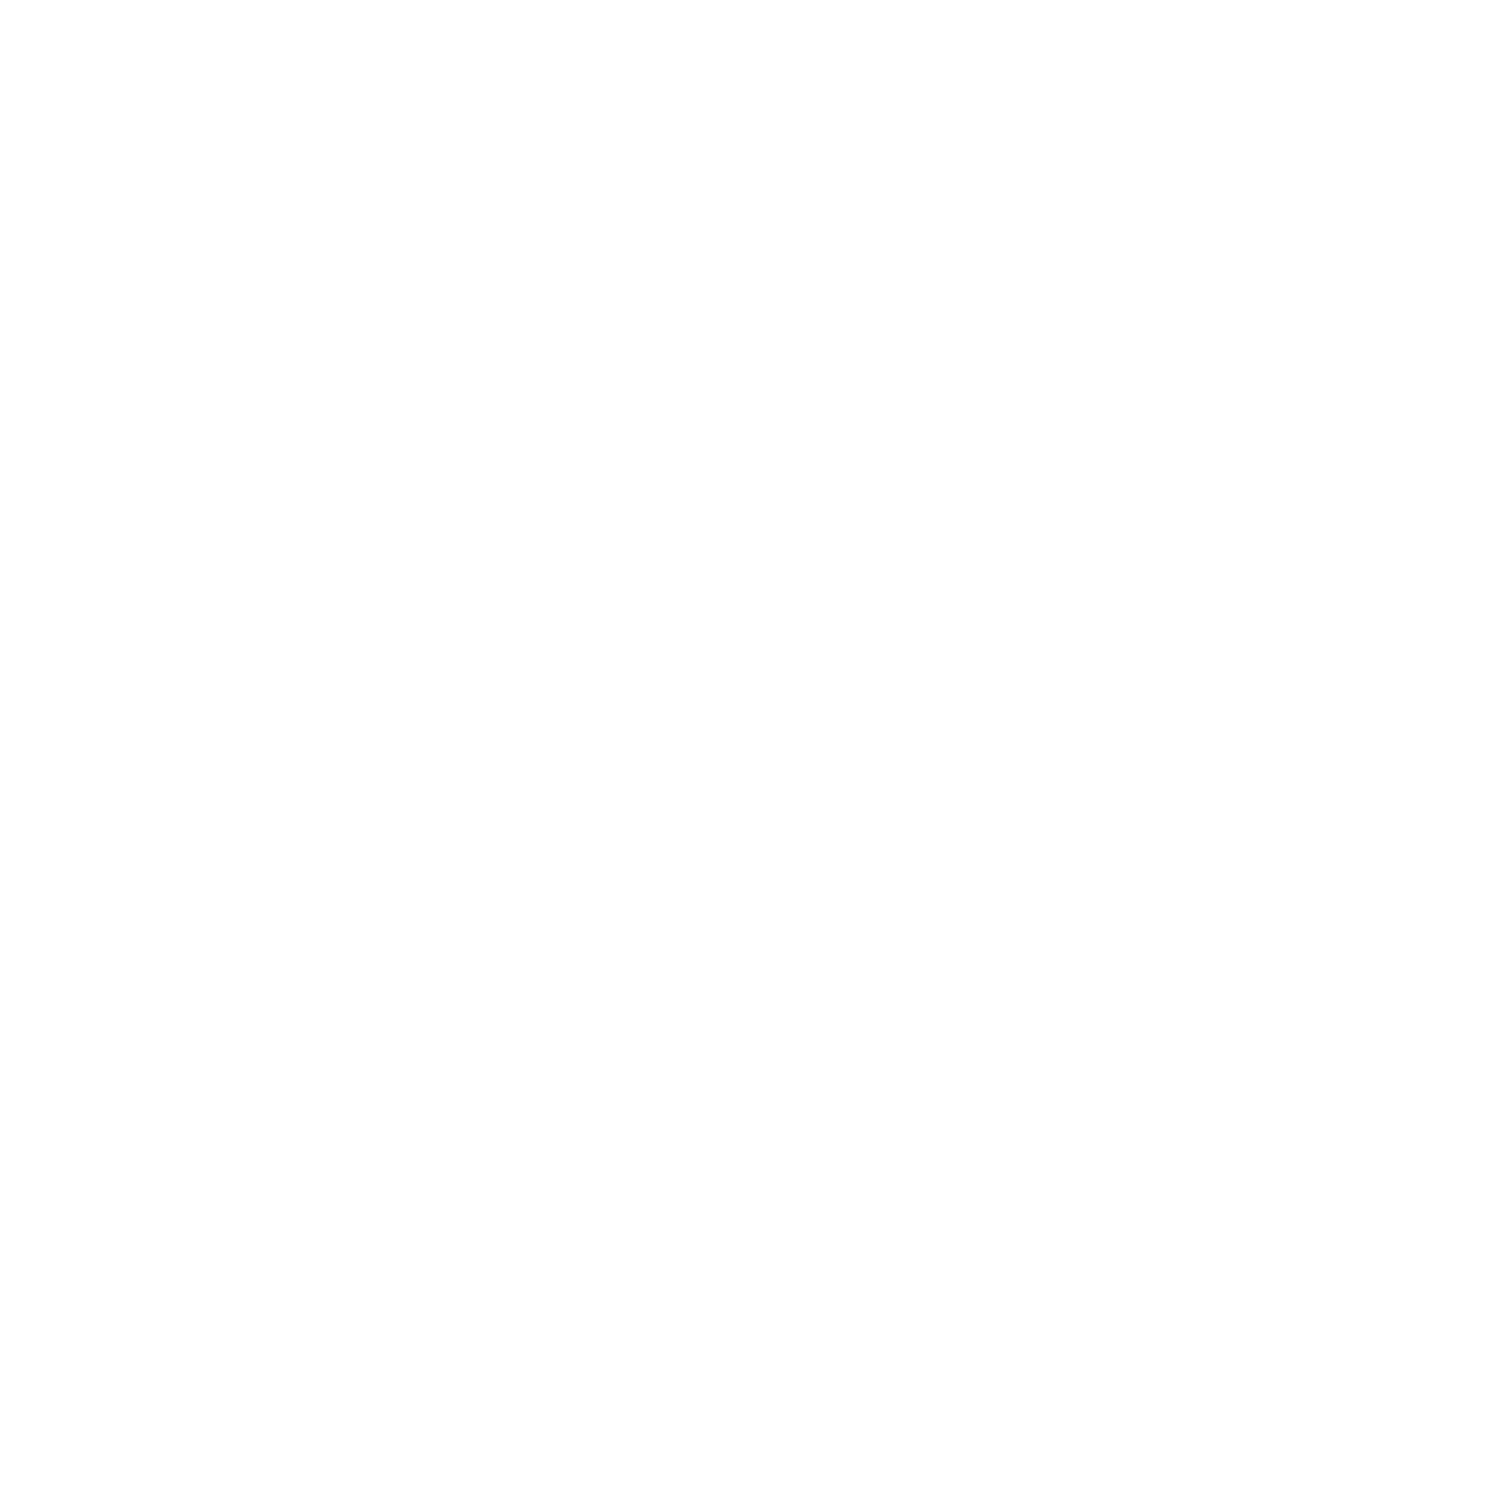 Cane Creek Sod